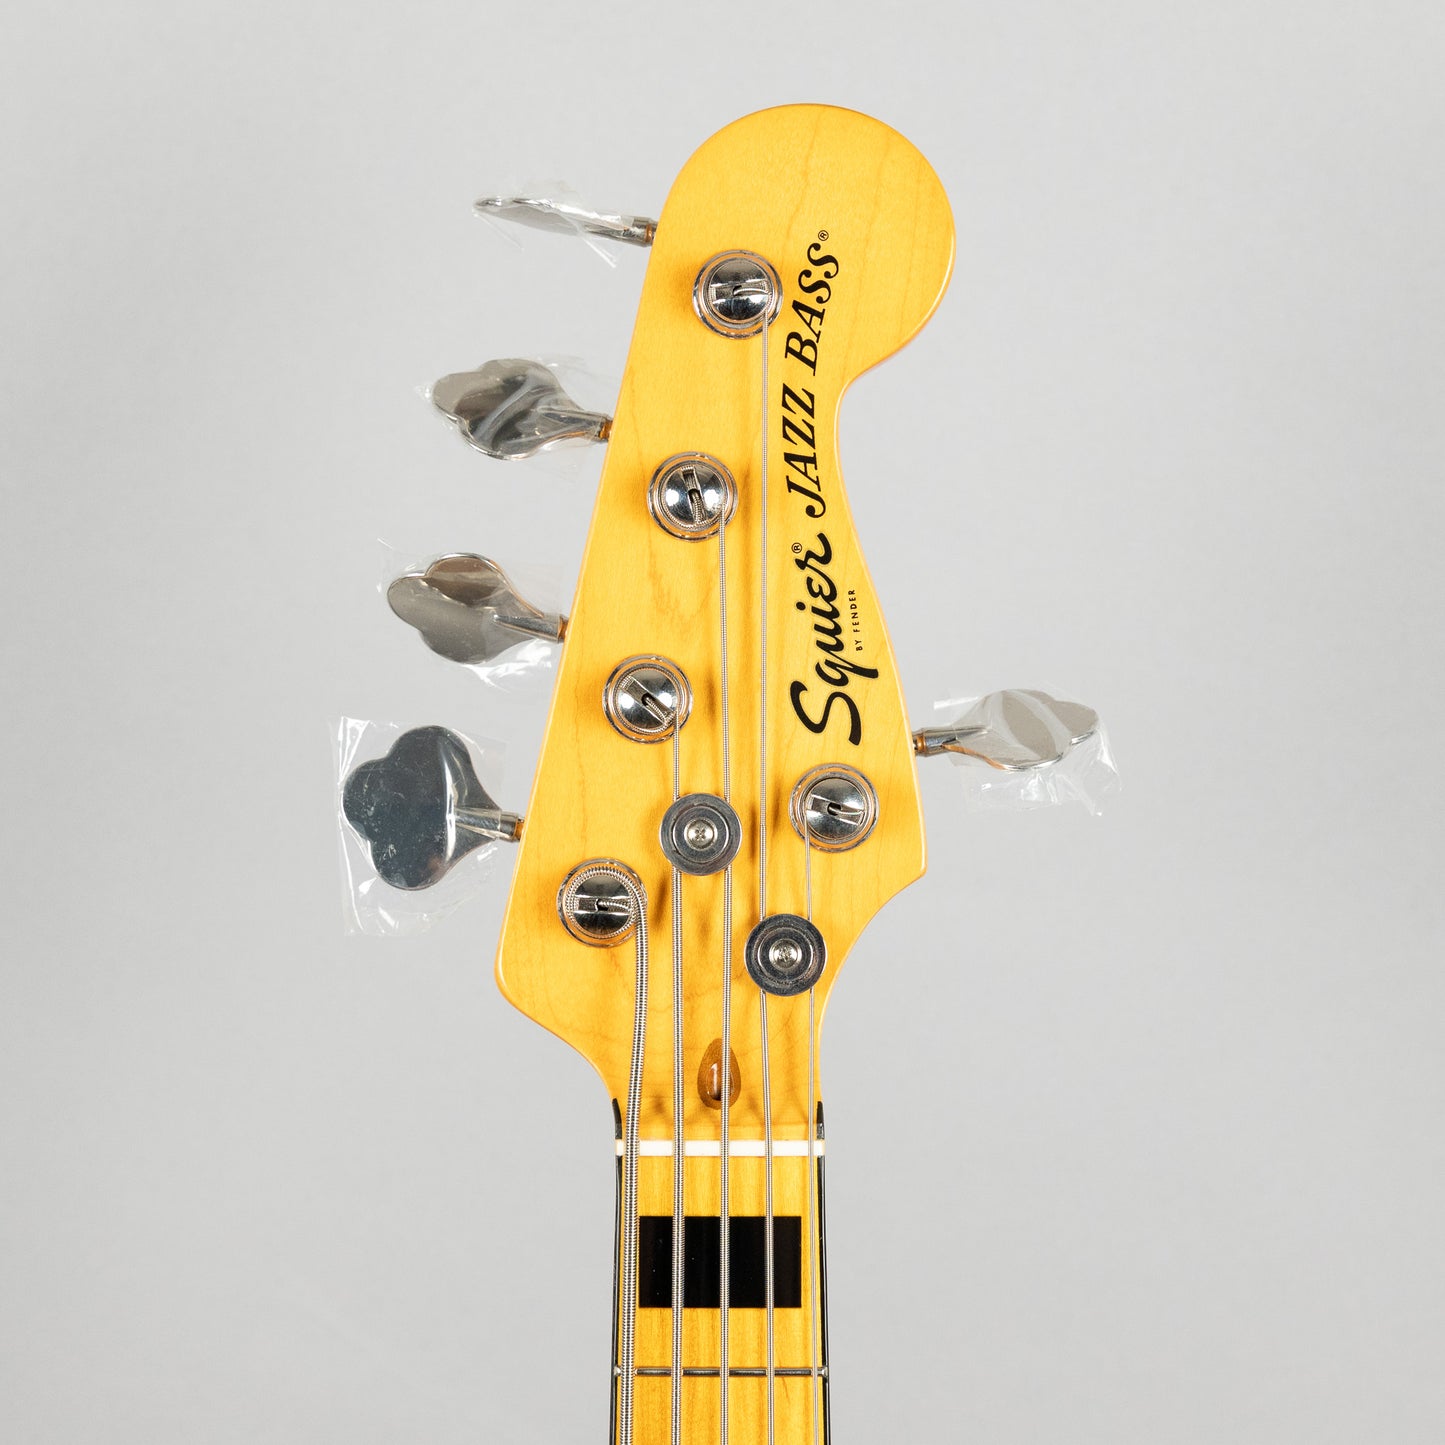 Squier Classic Vibe '70s Jazz Bass V in Black